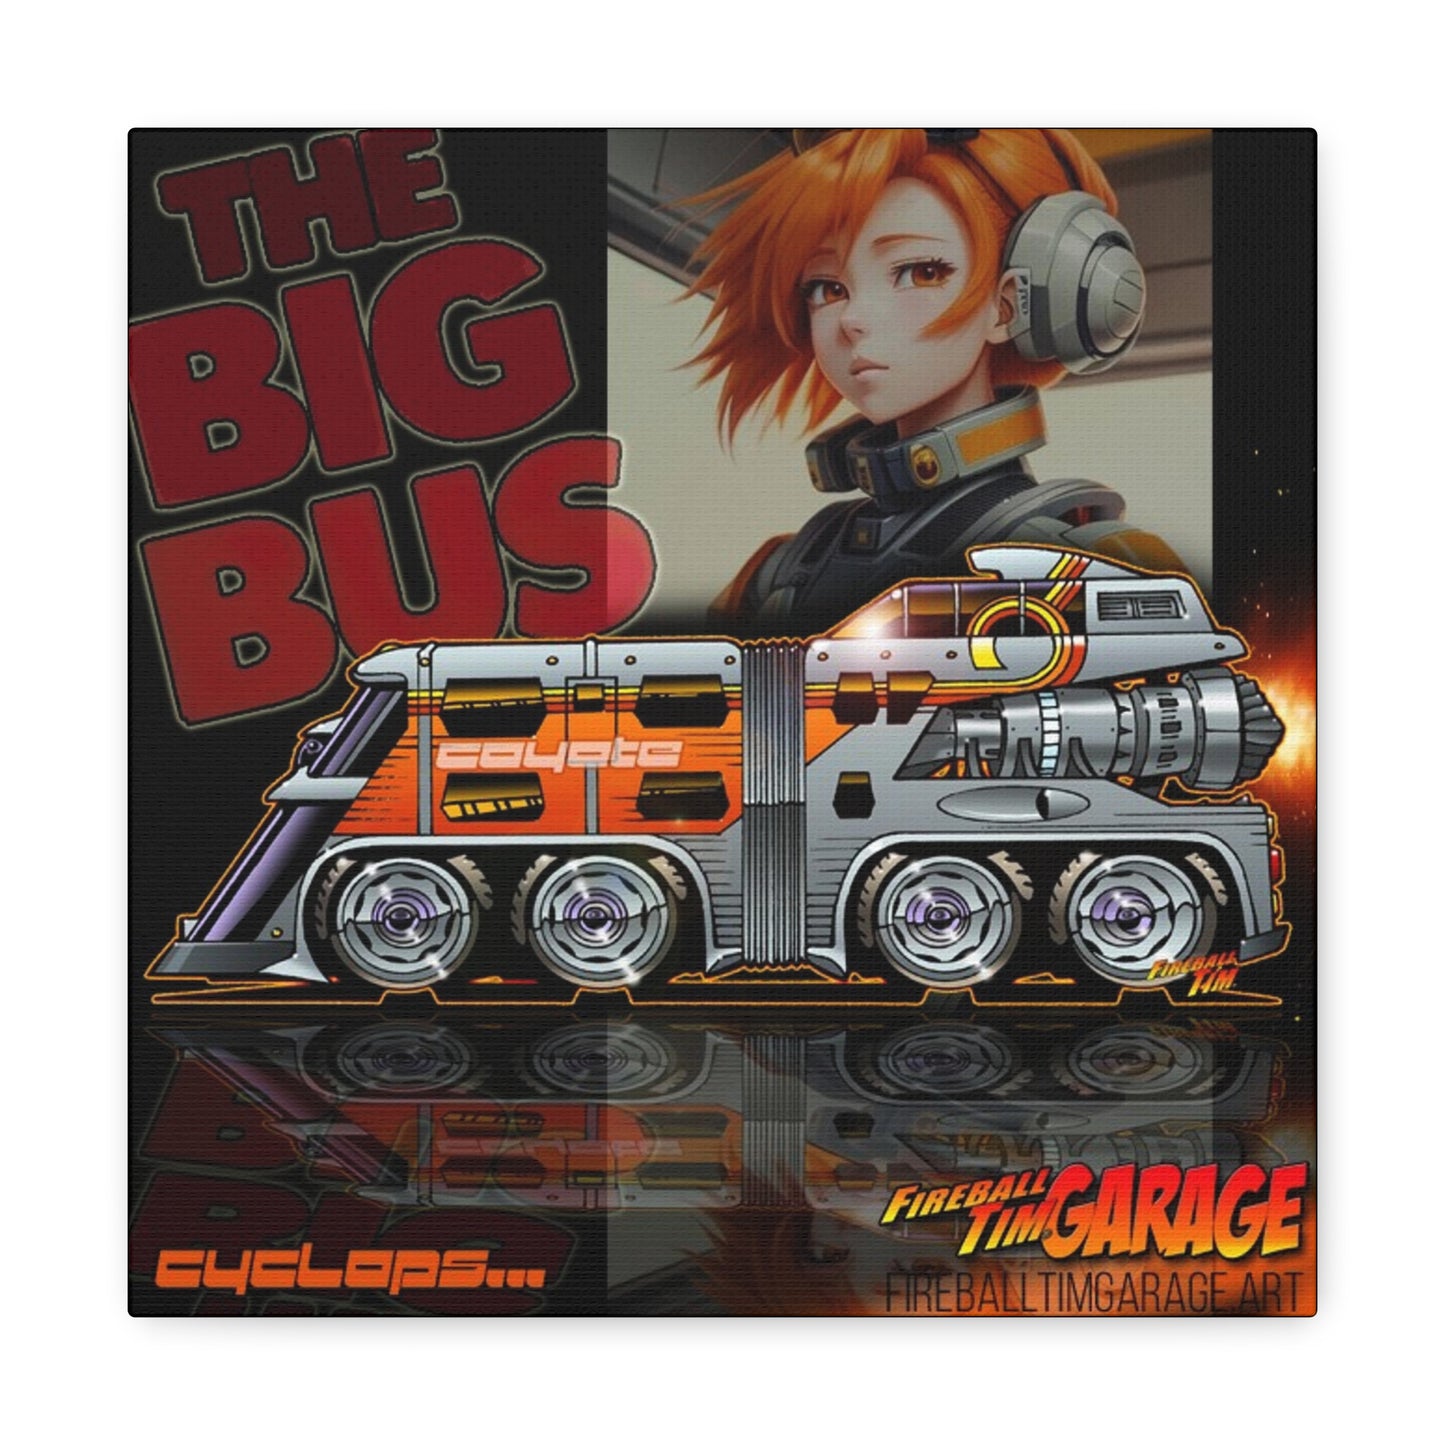 THE BIG BUS Cyclops Movie Car Garage Canvas Gallery Art Print 12x12